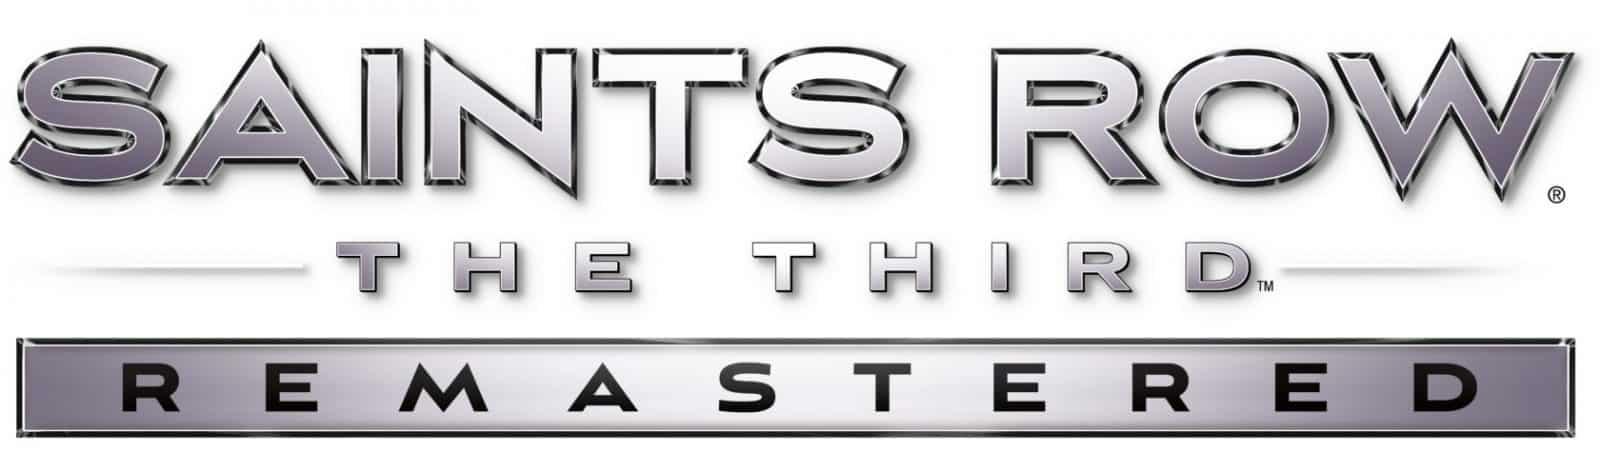 Saints Row The Third - Remastered Logo